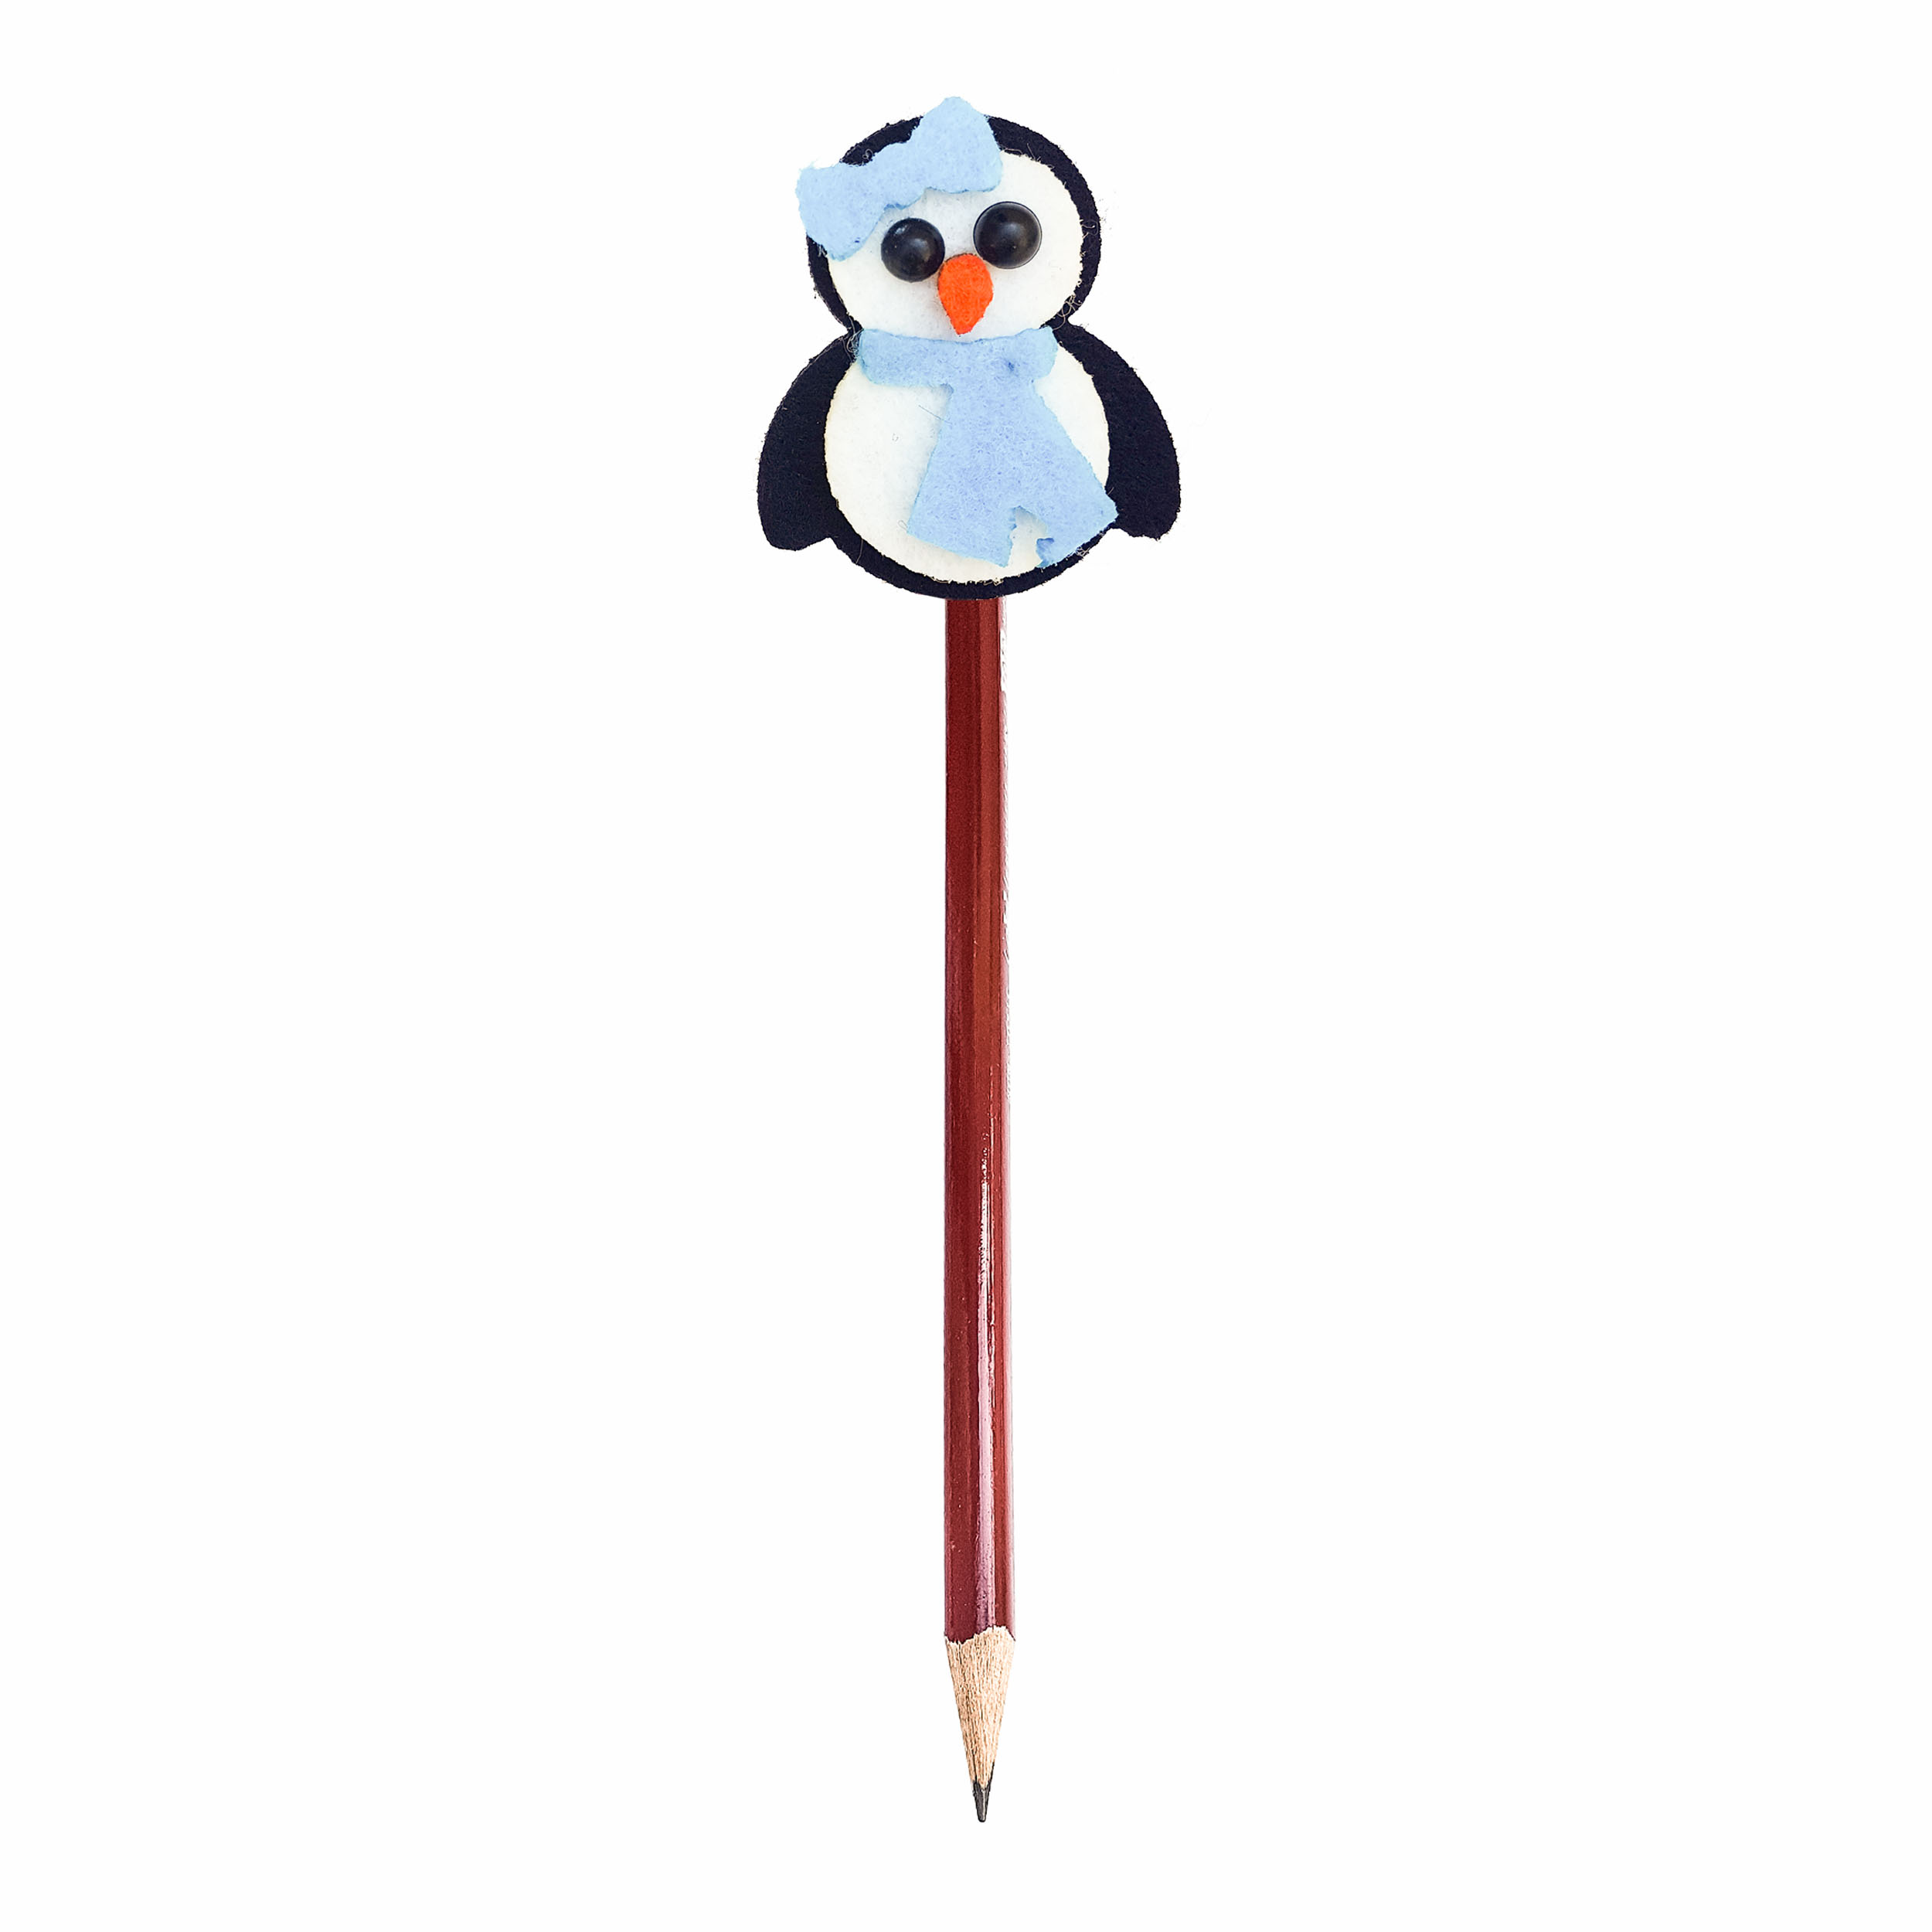 مداد مشکی توتو طرح پنگوئن J0 به همراه سرمدادی